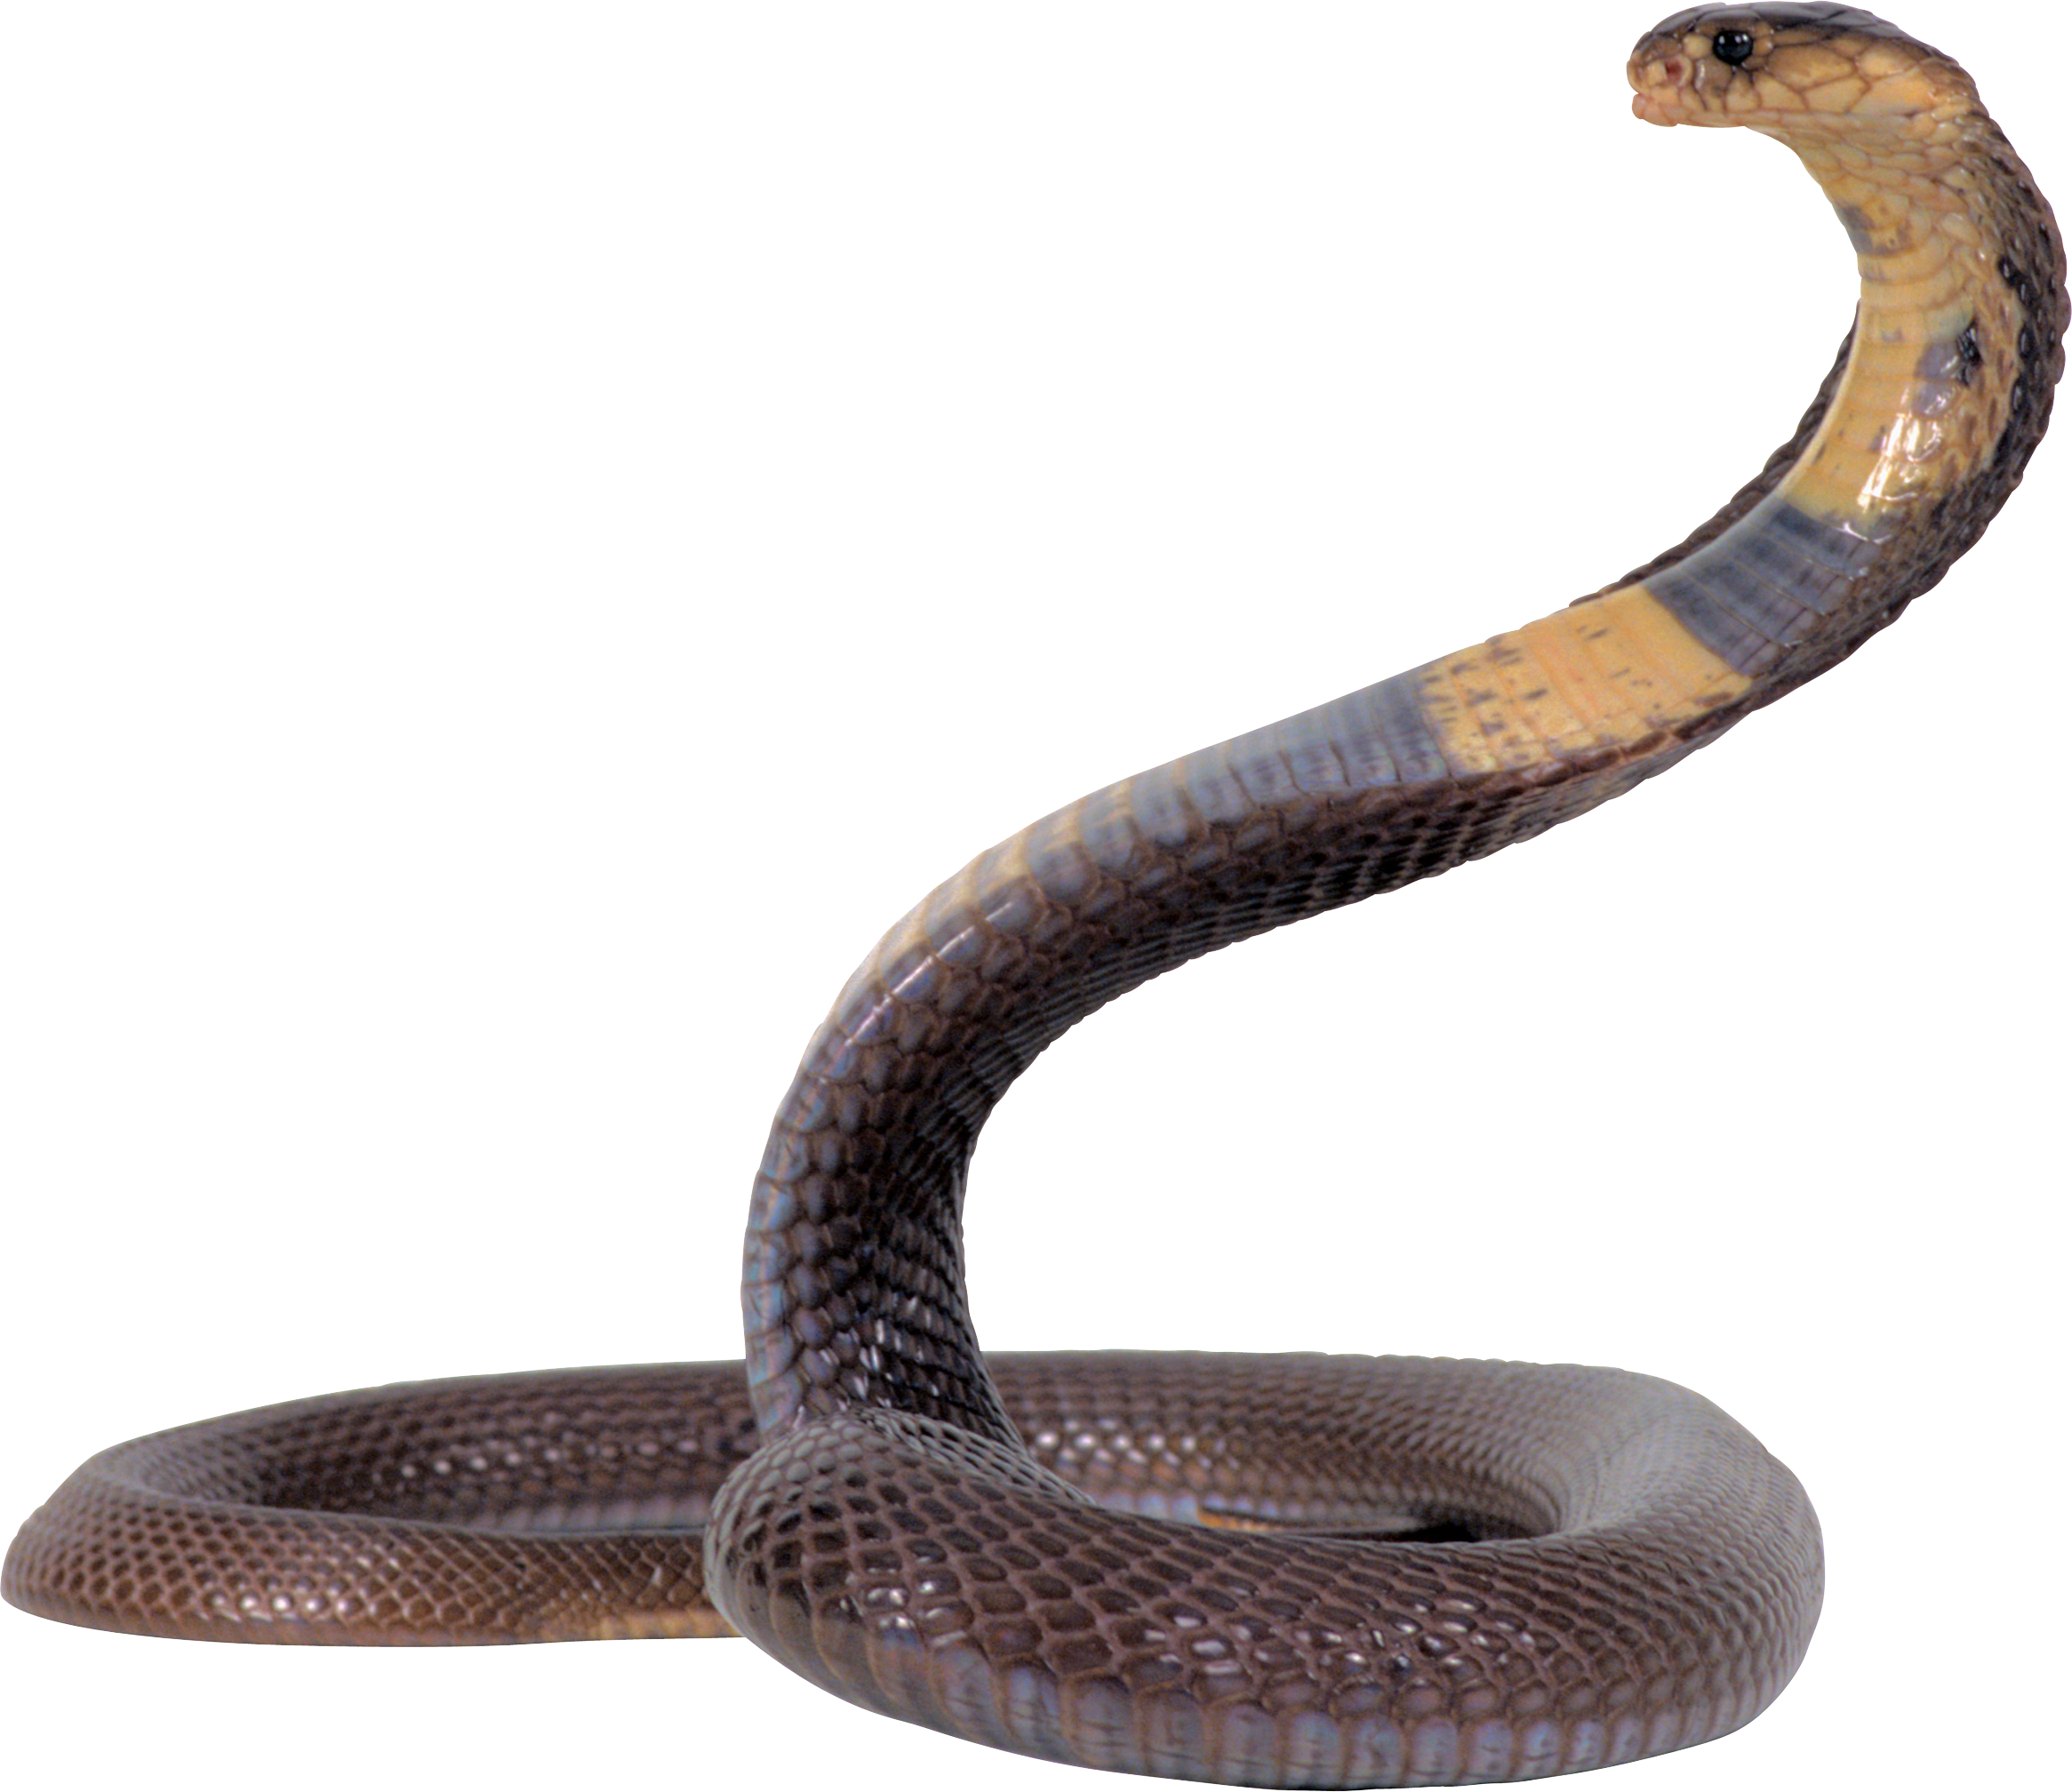 Cobra Snake Png Image, Free Download Picture - Cobra Snake, Transparent background PNG HD thumbnail